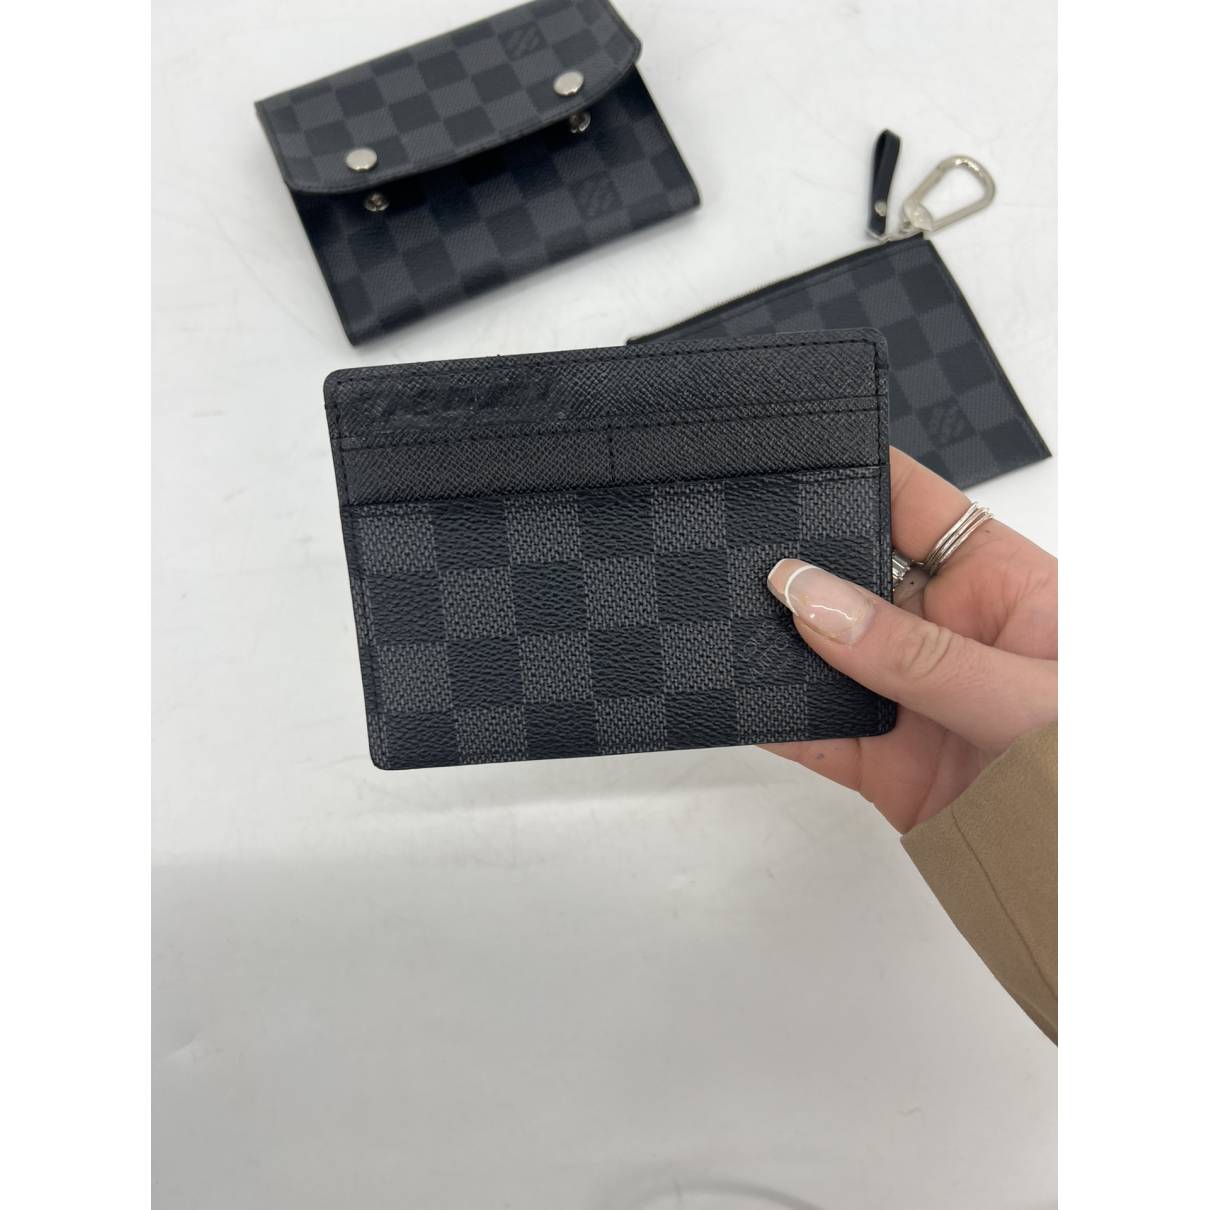 Louis Vuitton - Authenticated Pochette Alpha Triple Small Bag - Leather Multicolour for Men, Very Good Condition